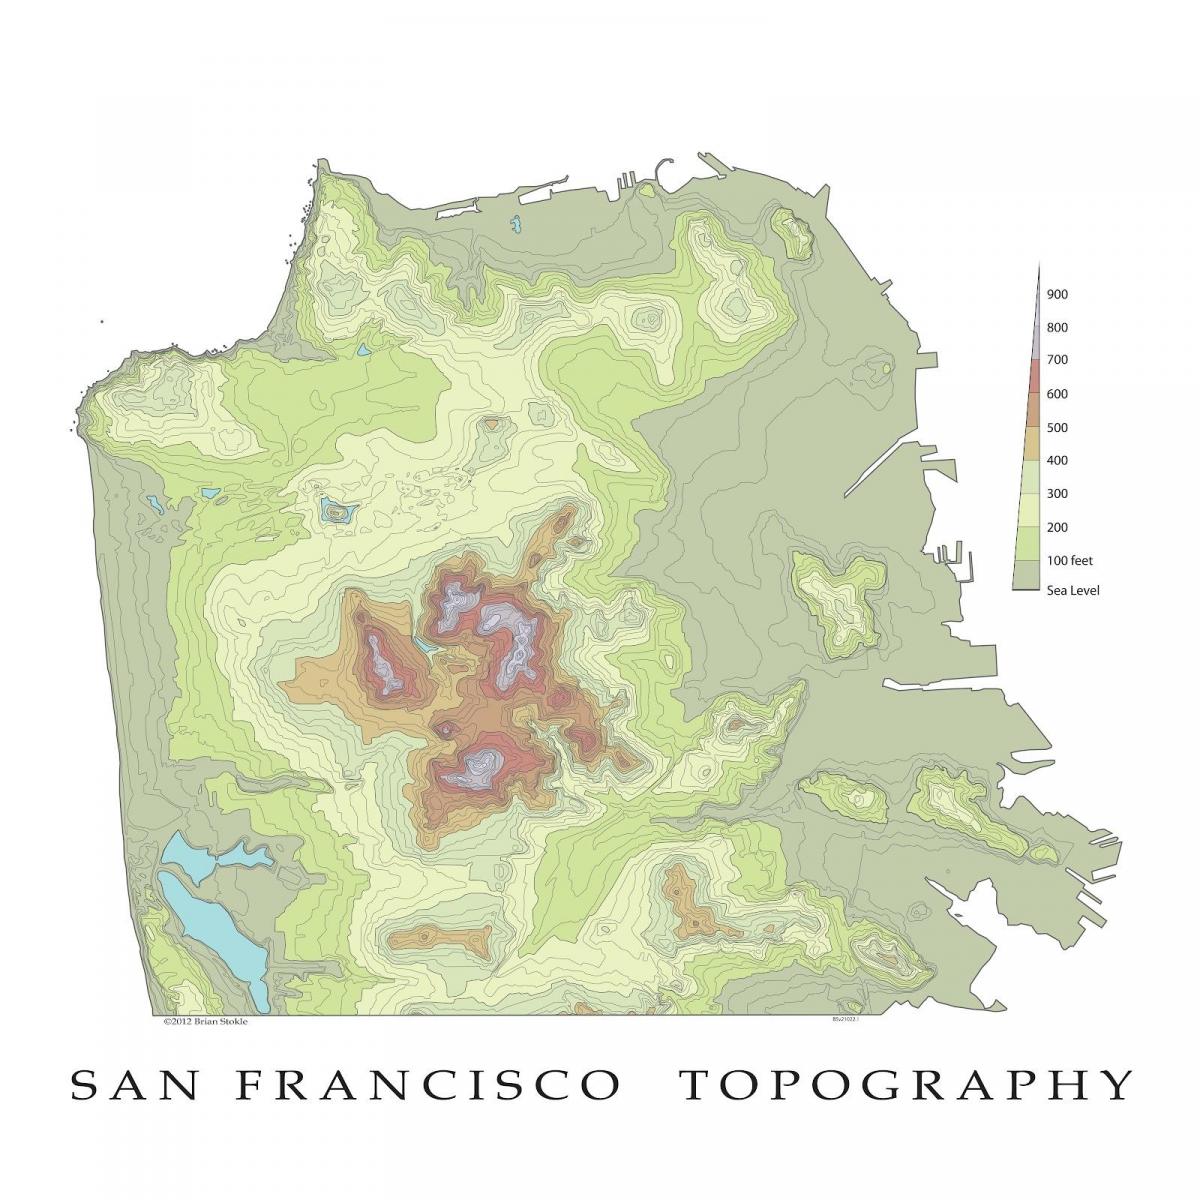 سان فرانسسکو topographic نقشہ